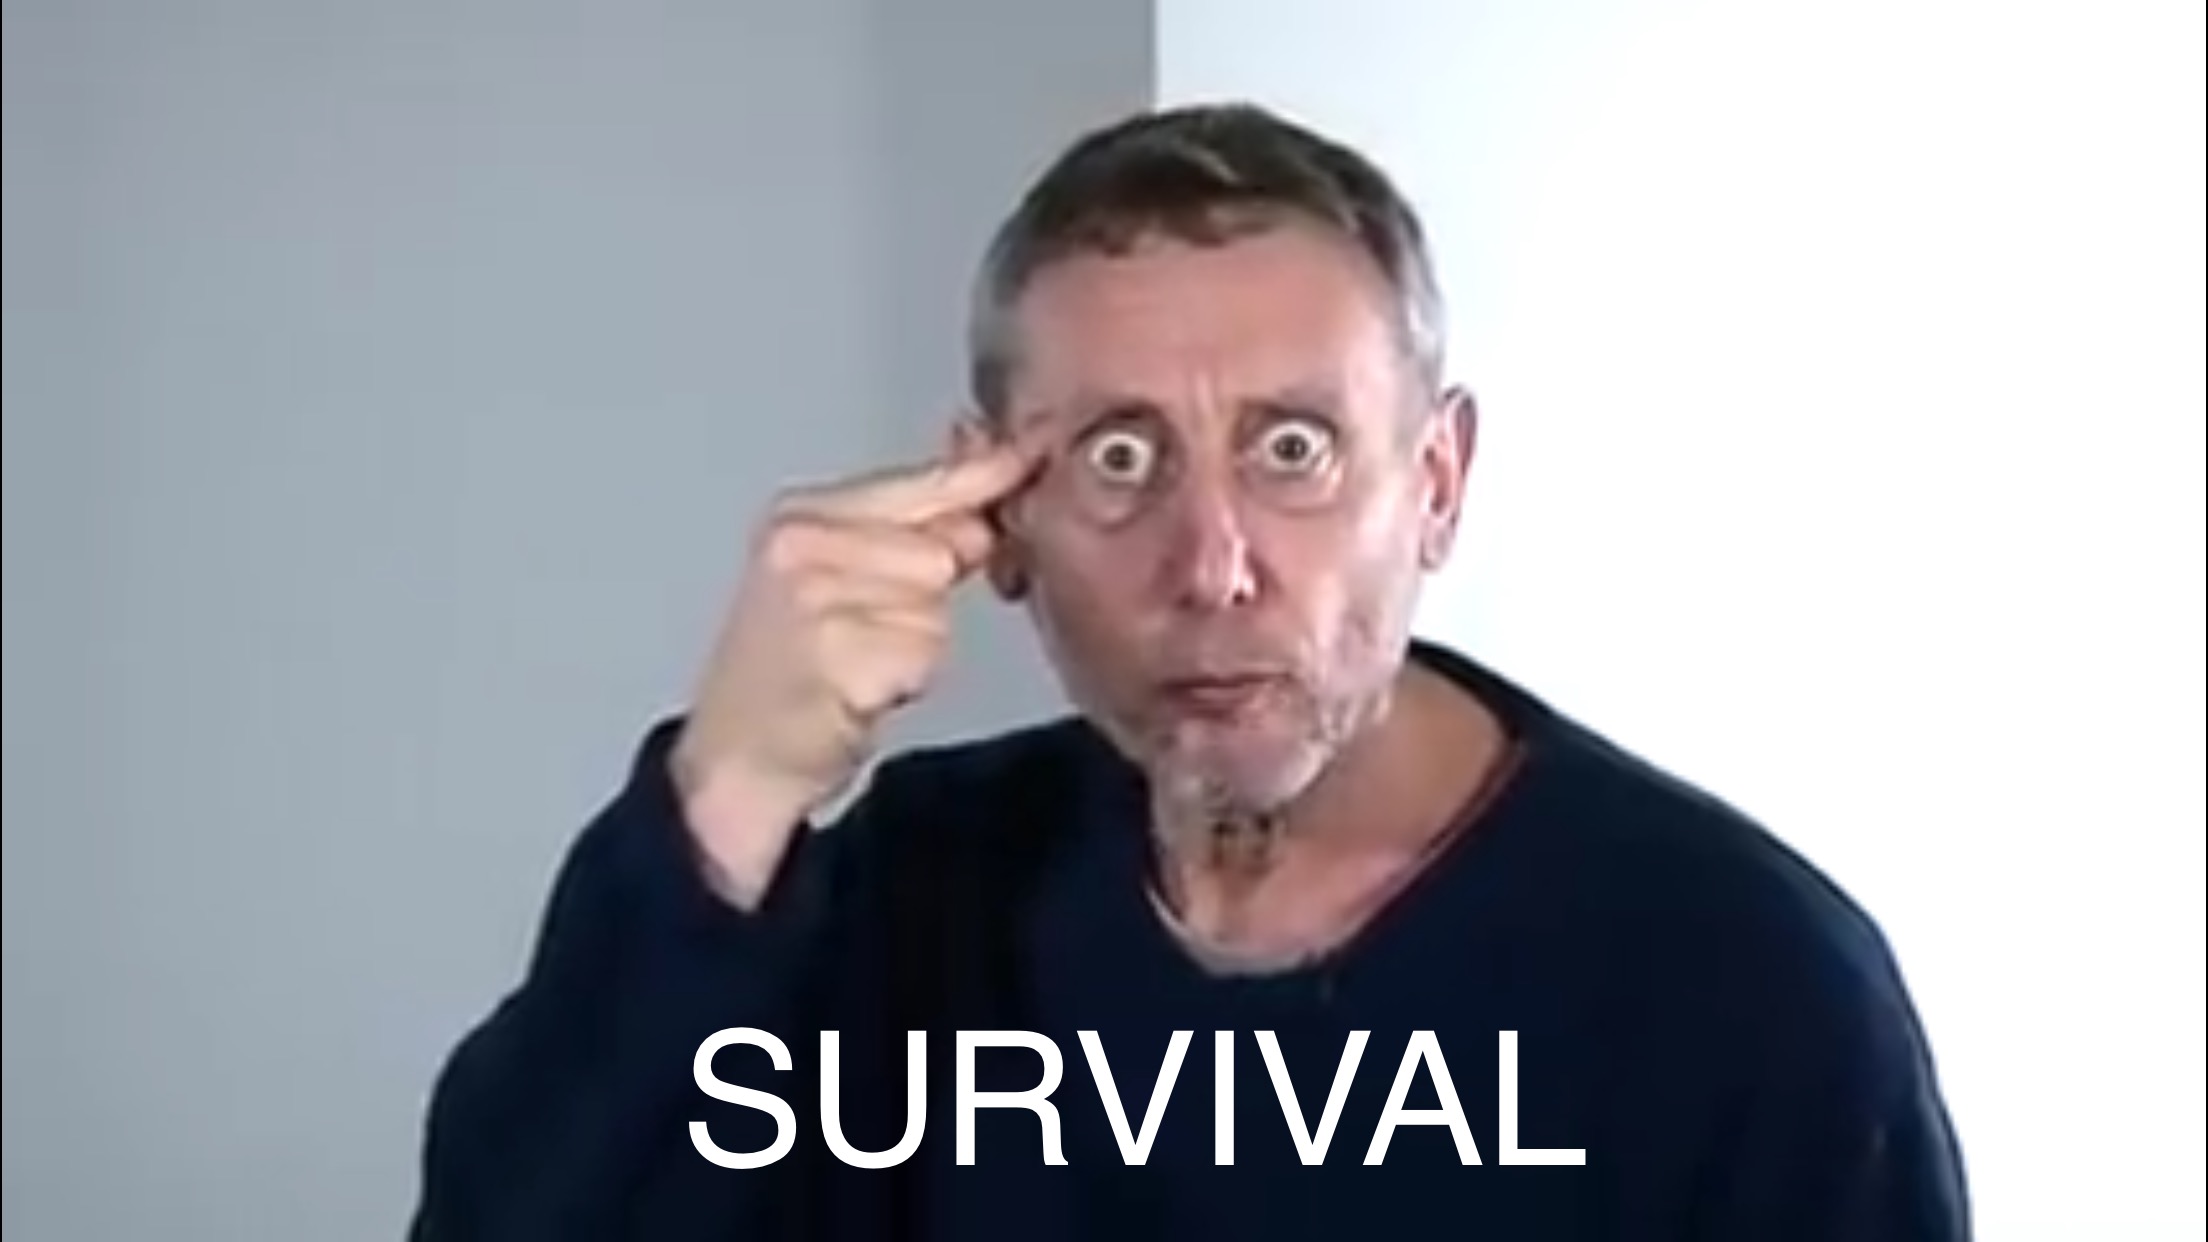 High Quality Survival. Blank Meme Template